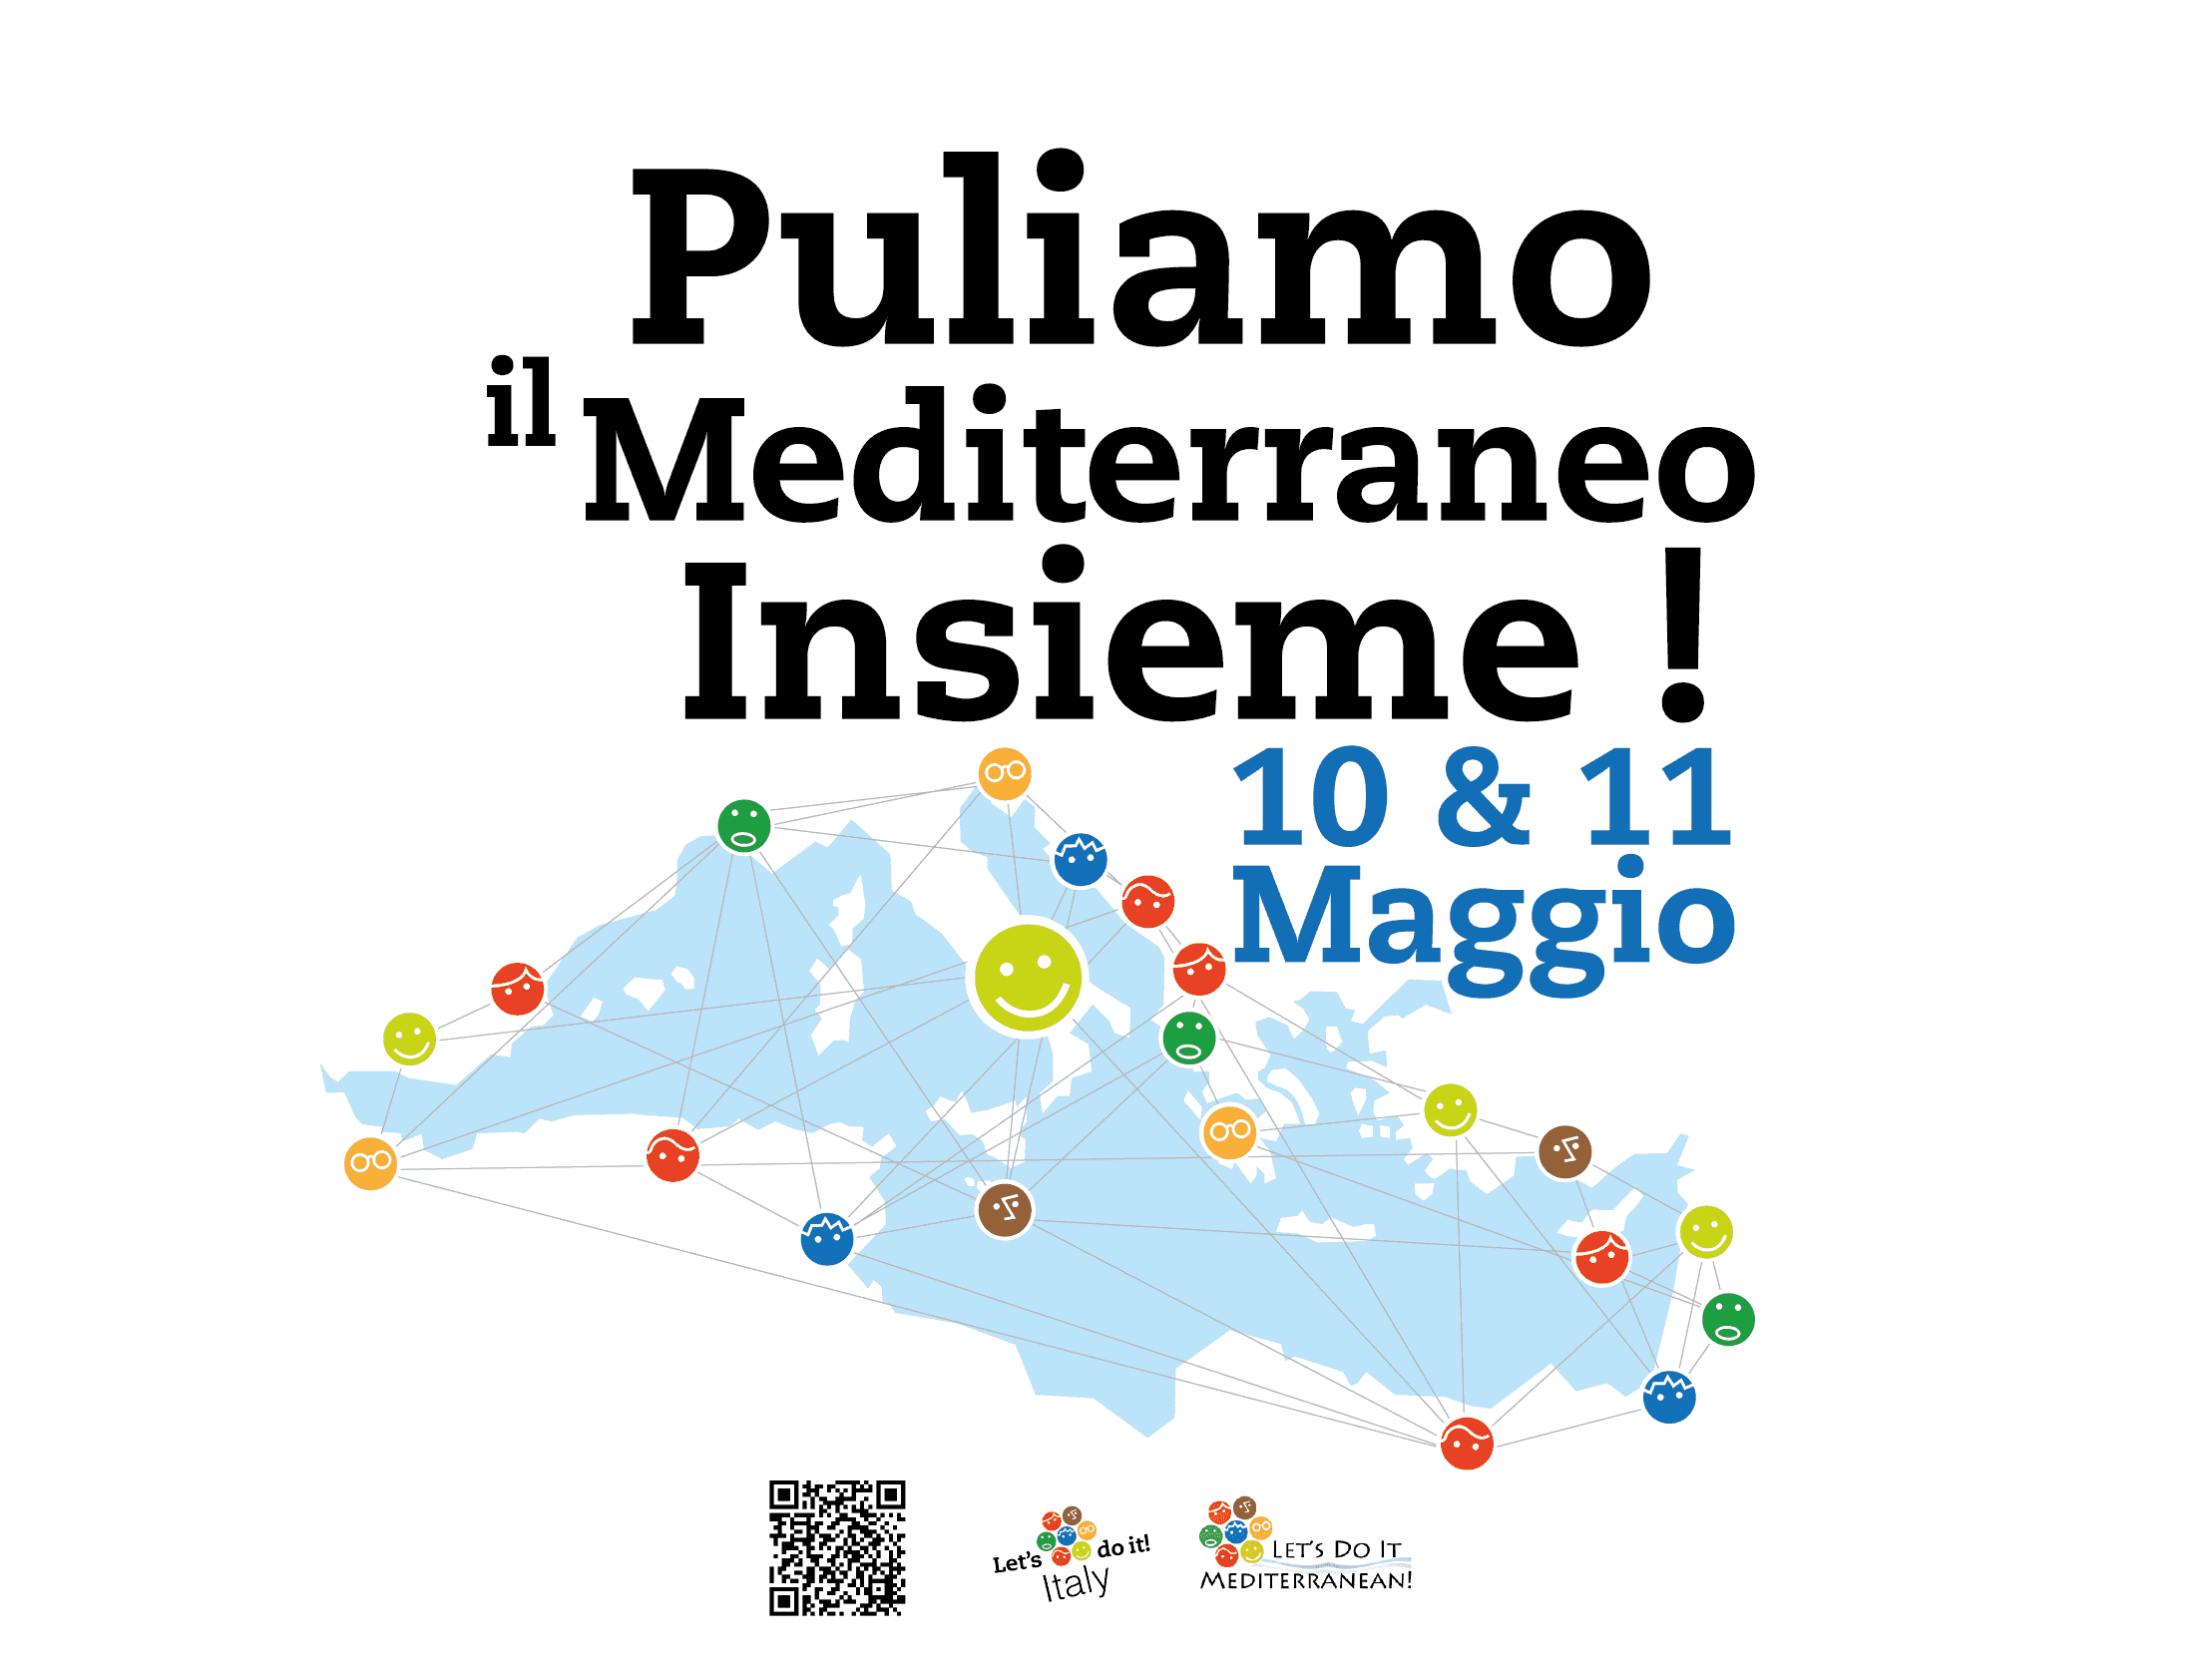 Let's Do It! Mediterranean, i volontari ripuliscono le coste italiane